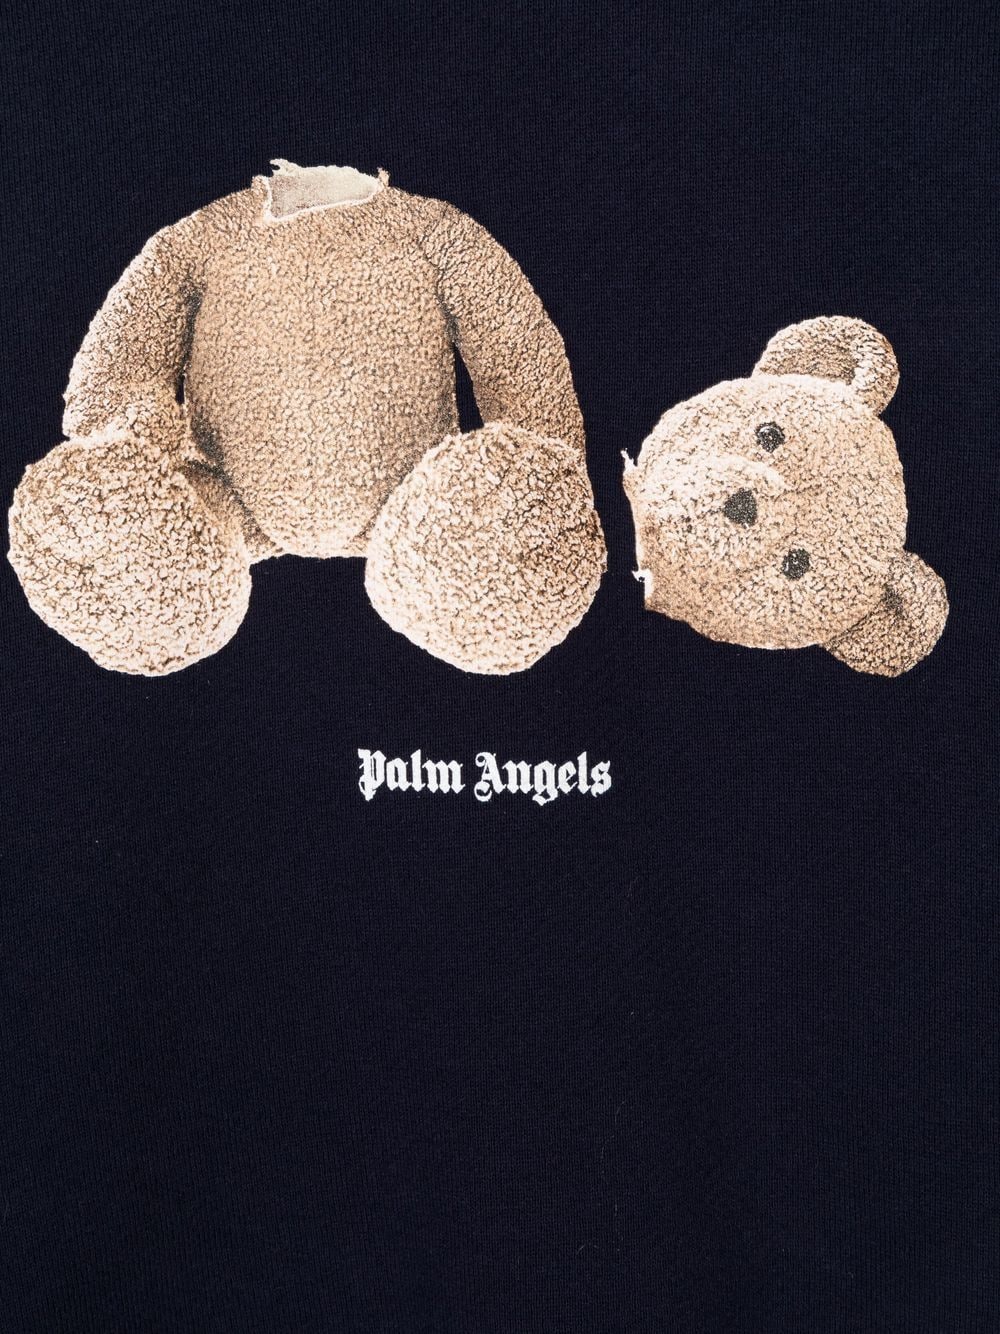 Teddy bear motif sweatshirt